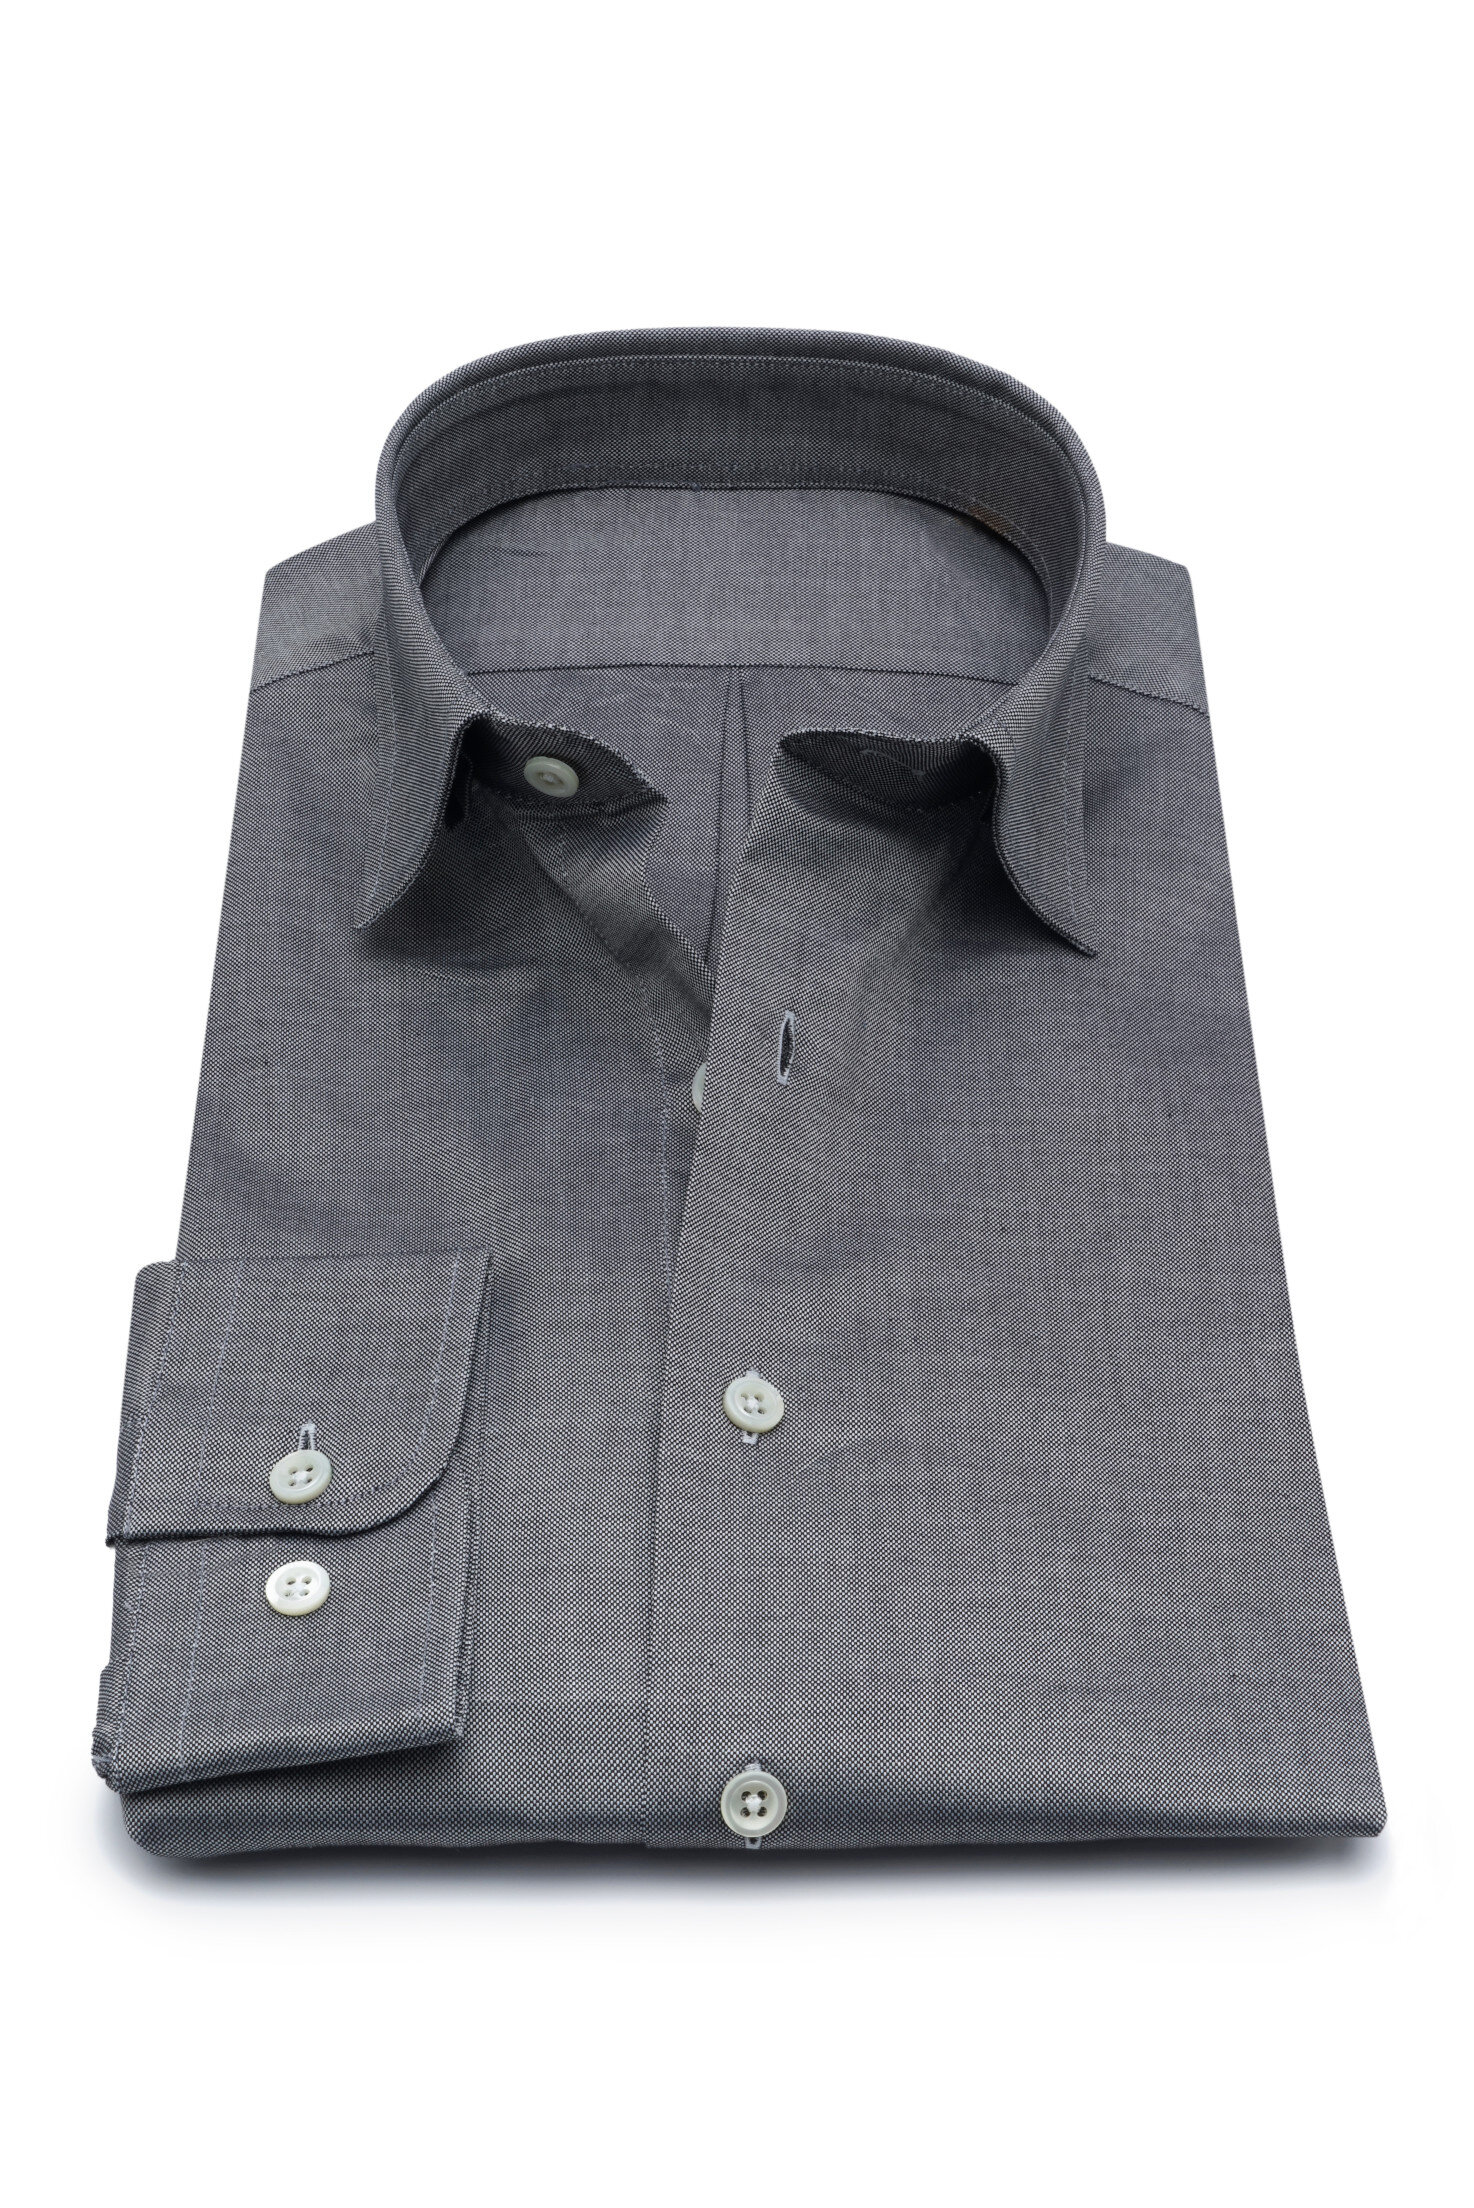 559 YARN015 | Yarn Dyed Shirts | Private Label Shirt Manufacturer | Turkey: % 100 Cotton - Oxford Weave - Grey - Antracite - OffiCe Shirt - Long Sleeve - Hidden Buttondown